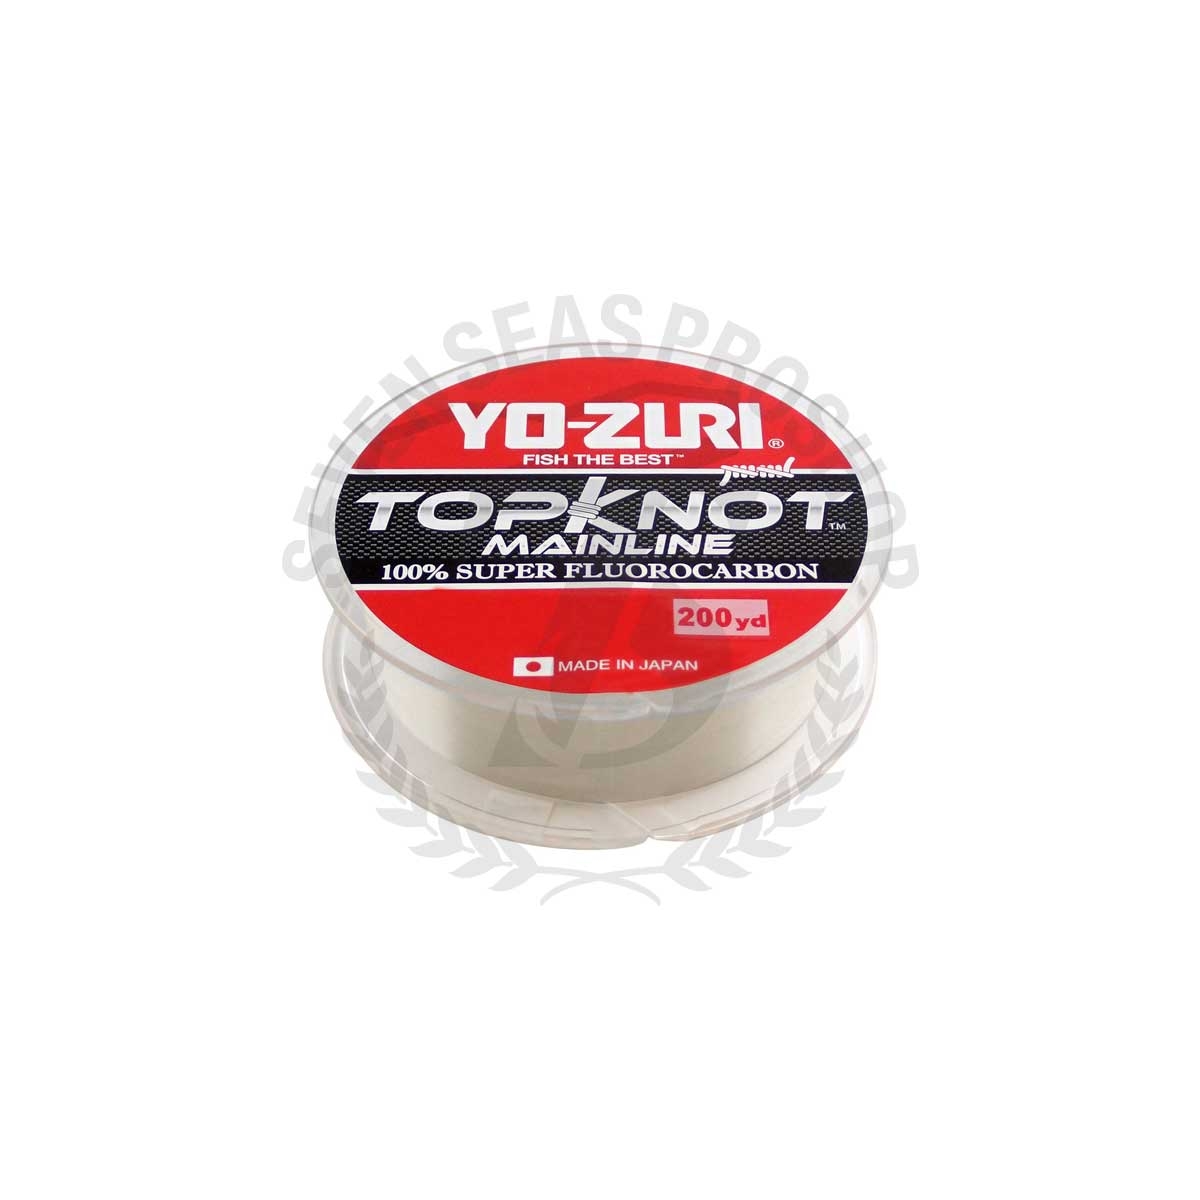 Yo-Zuri Top Knot Mainline 100% Super Fluorocarbon 200yds #R1218